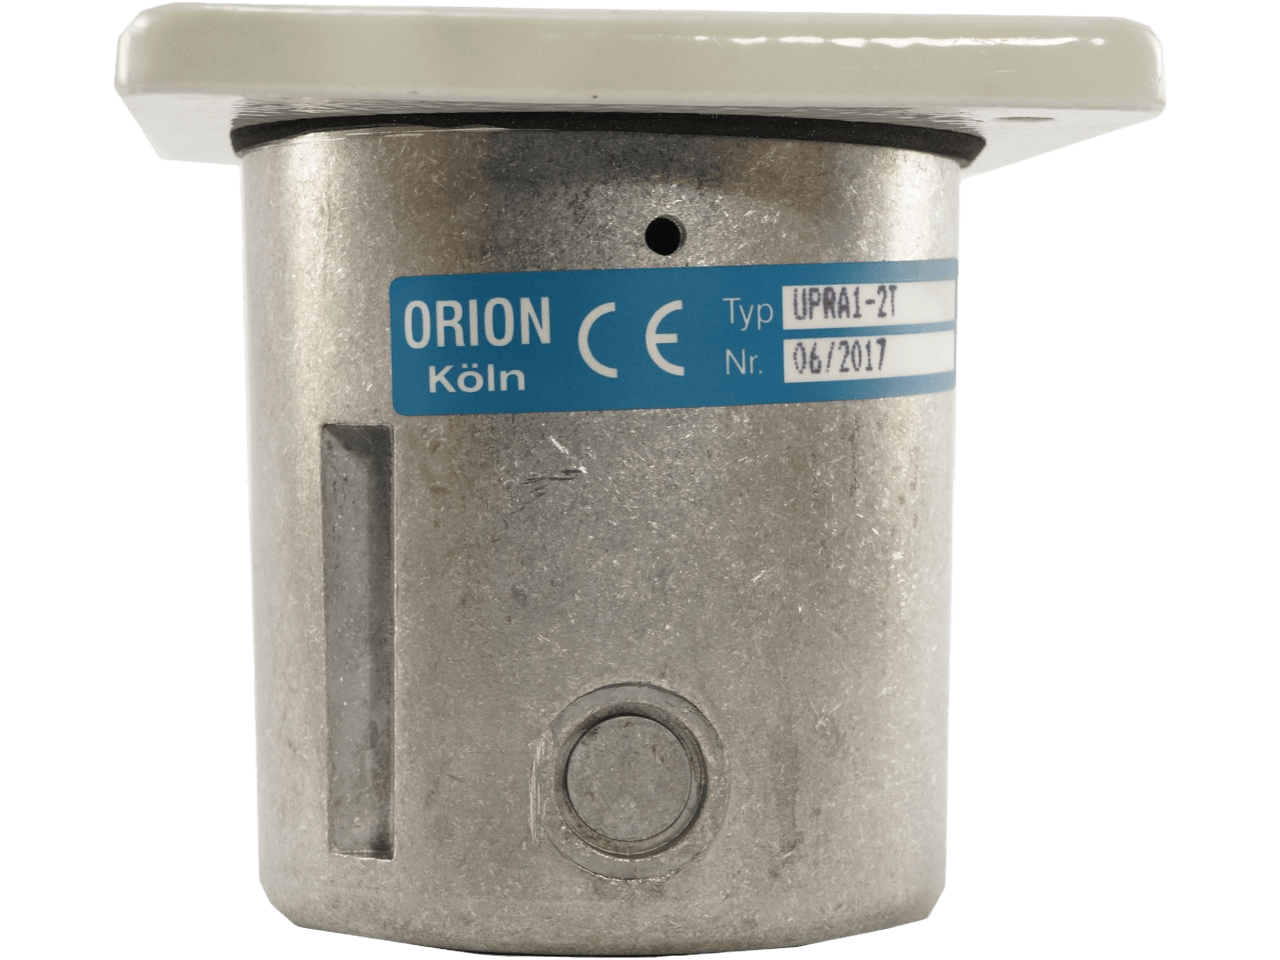 Orion UPRA 1-2 T Key-Switch Flush-Mount 2-direction